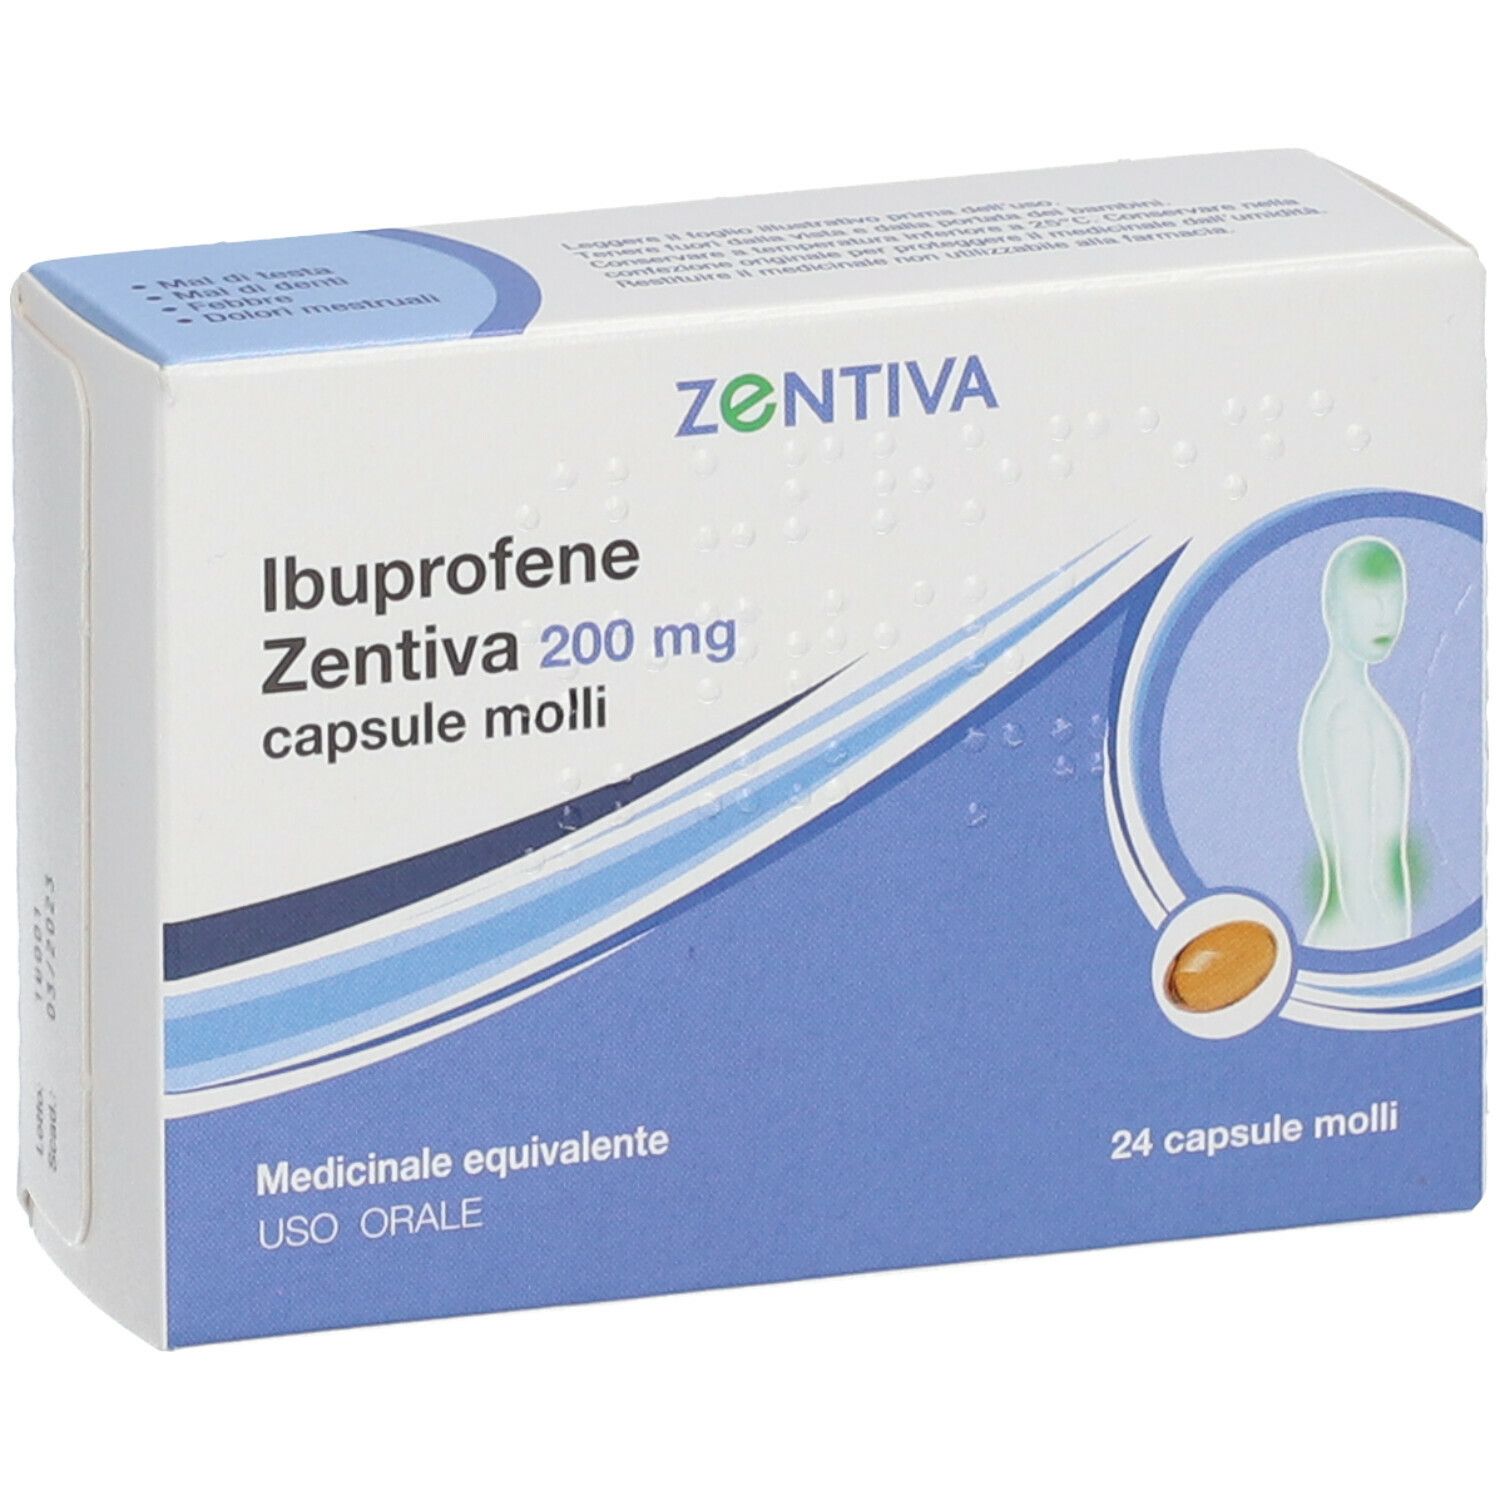 Image of Zentiva Ibuprofene 200 mg Antinfiammatorio 24 Capsule Molli